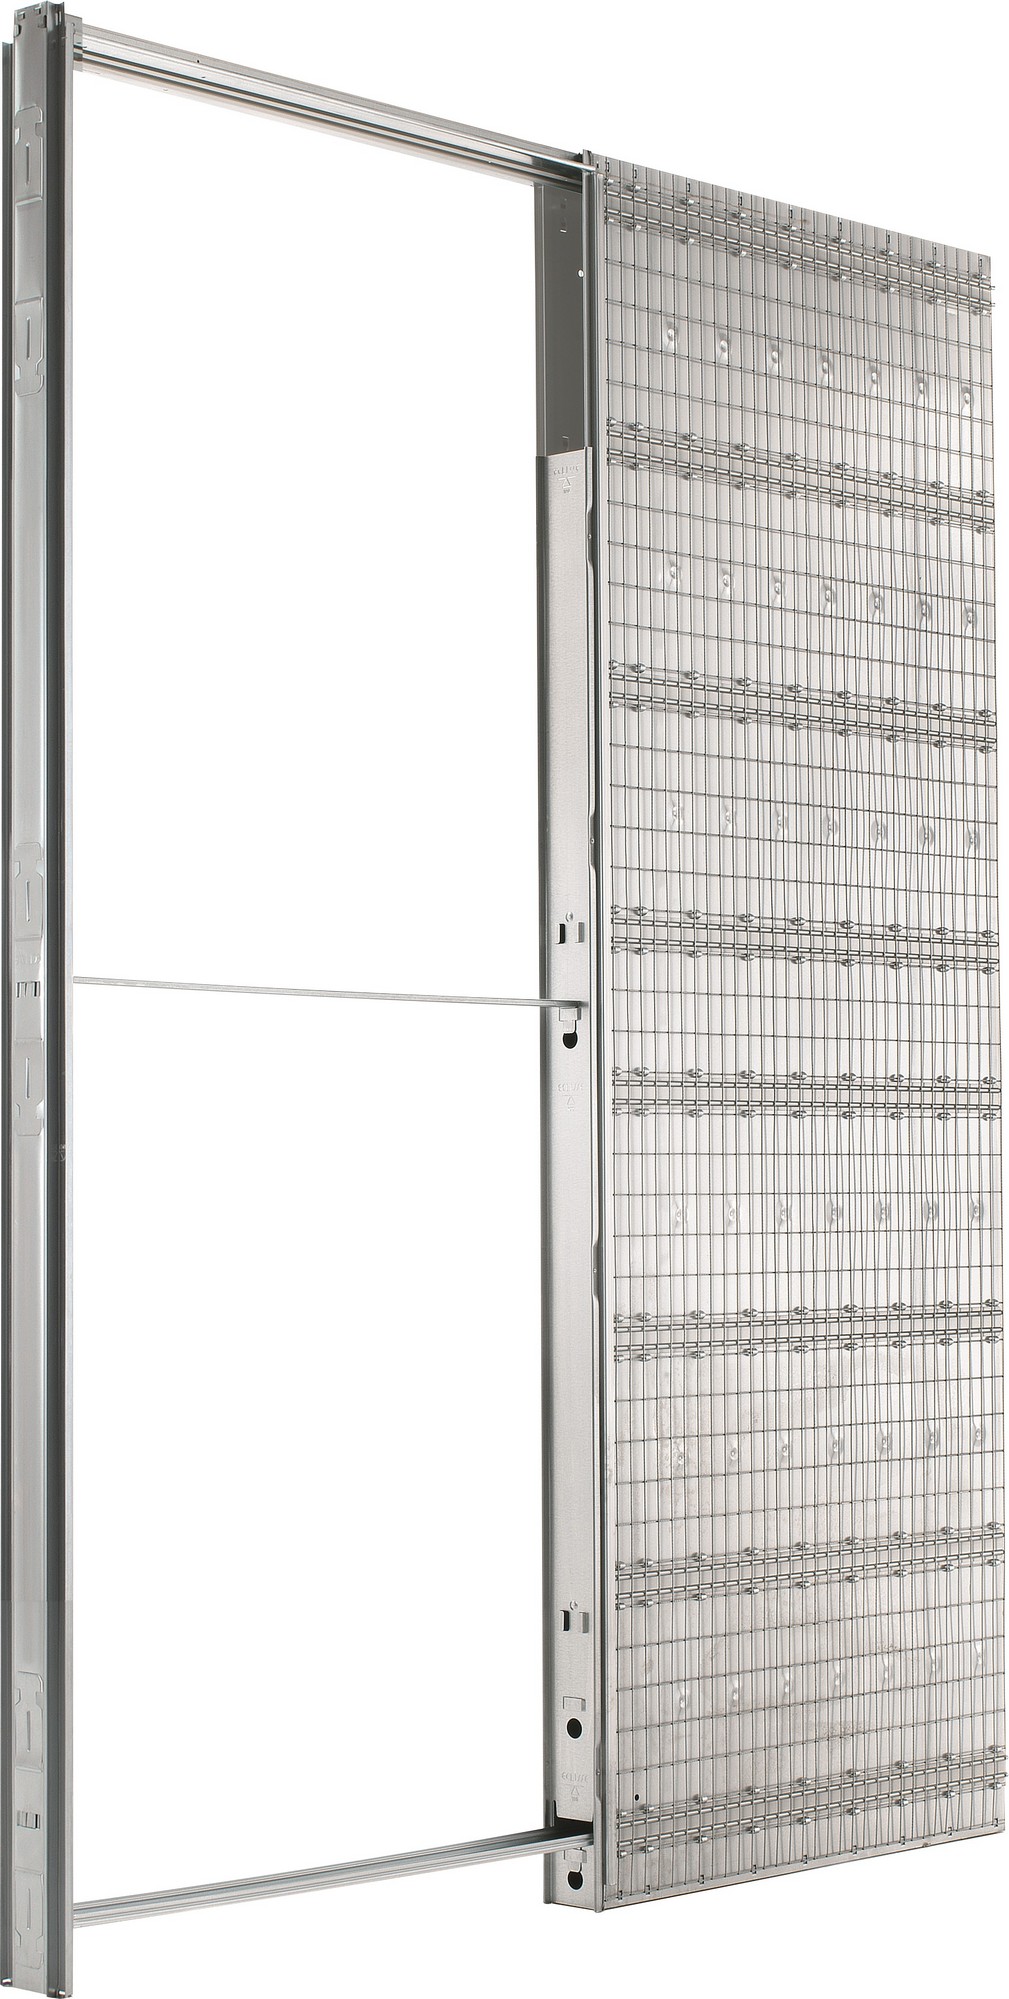 Pouzdro Eclisse Standard 1100/2100 mm do zdiva tl. 100 mm